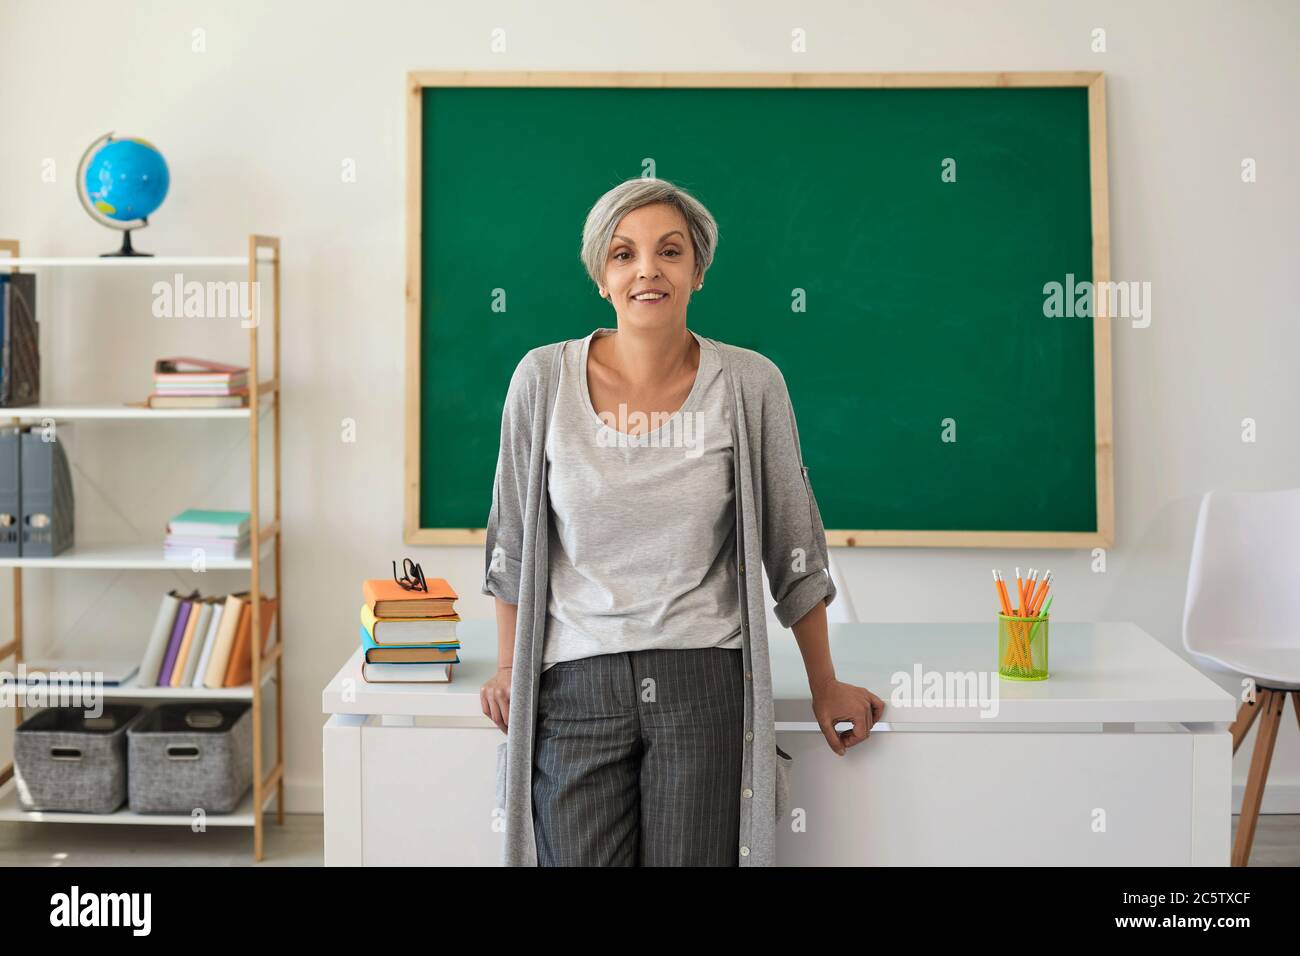 A teacher with gray hair teaches standing in a school class Stock Photo